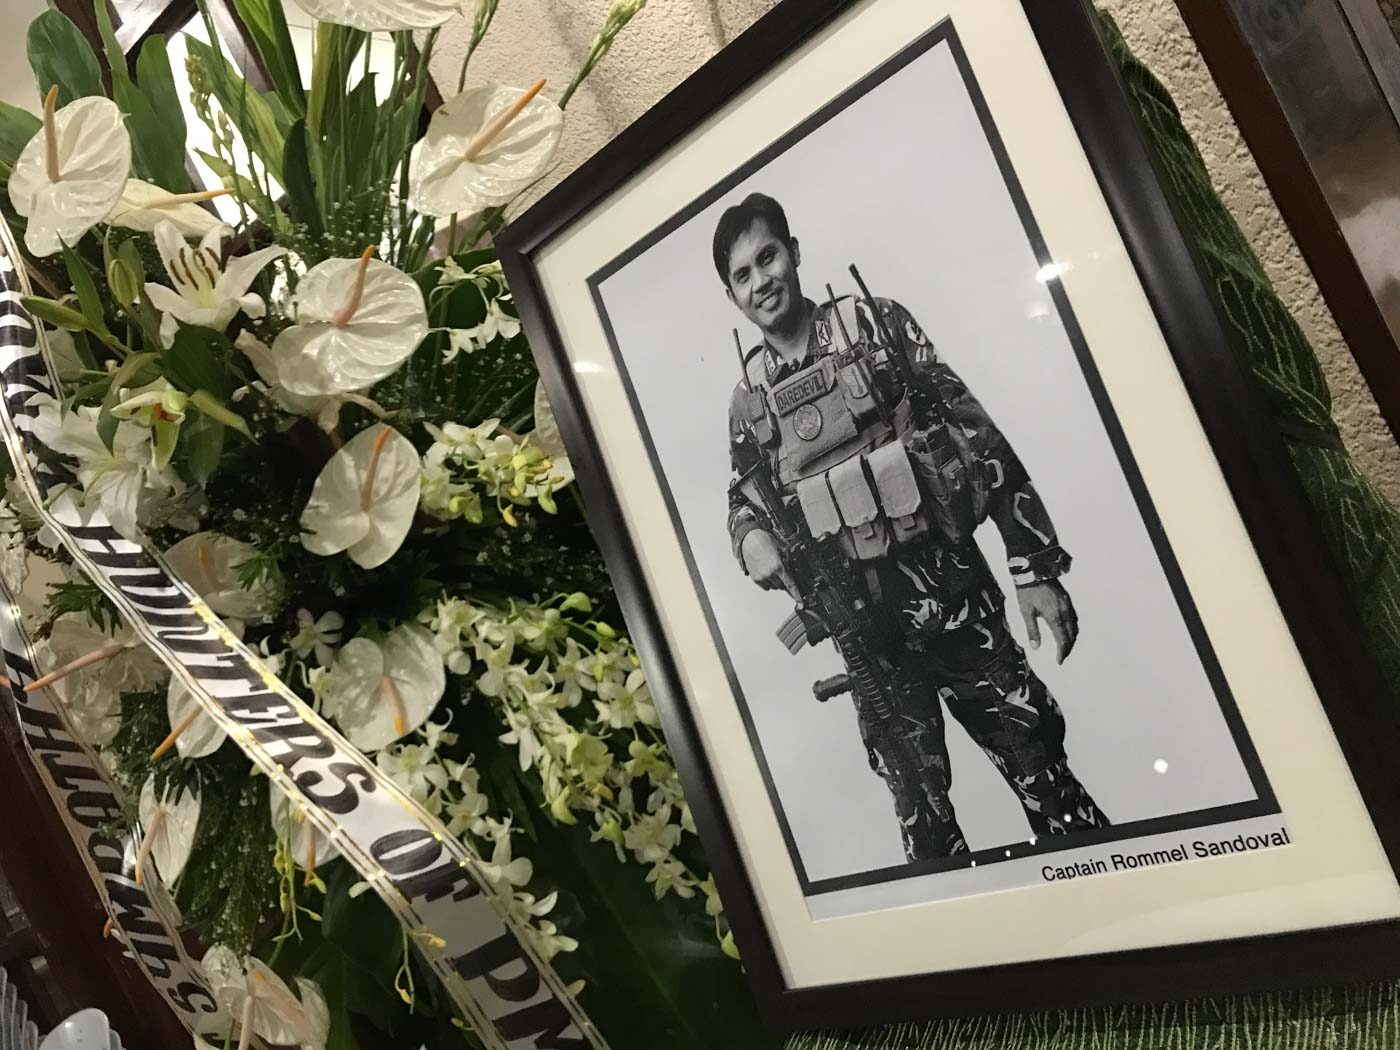 Undas 2017: PH military remembers Marawi heroes